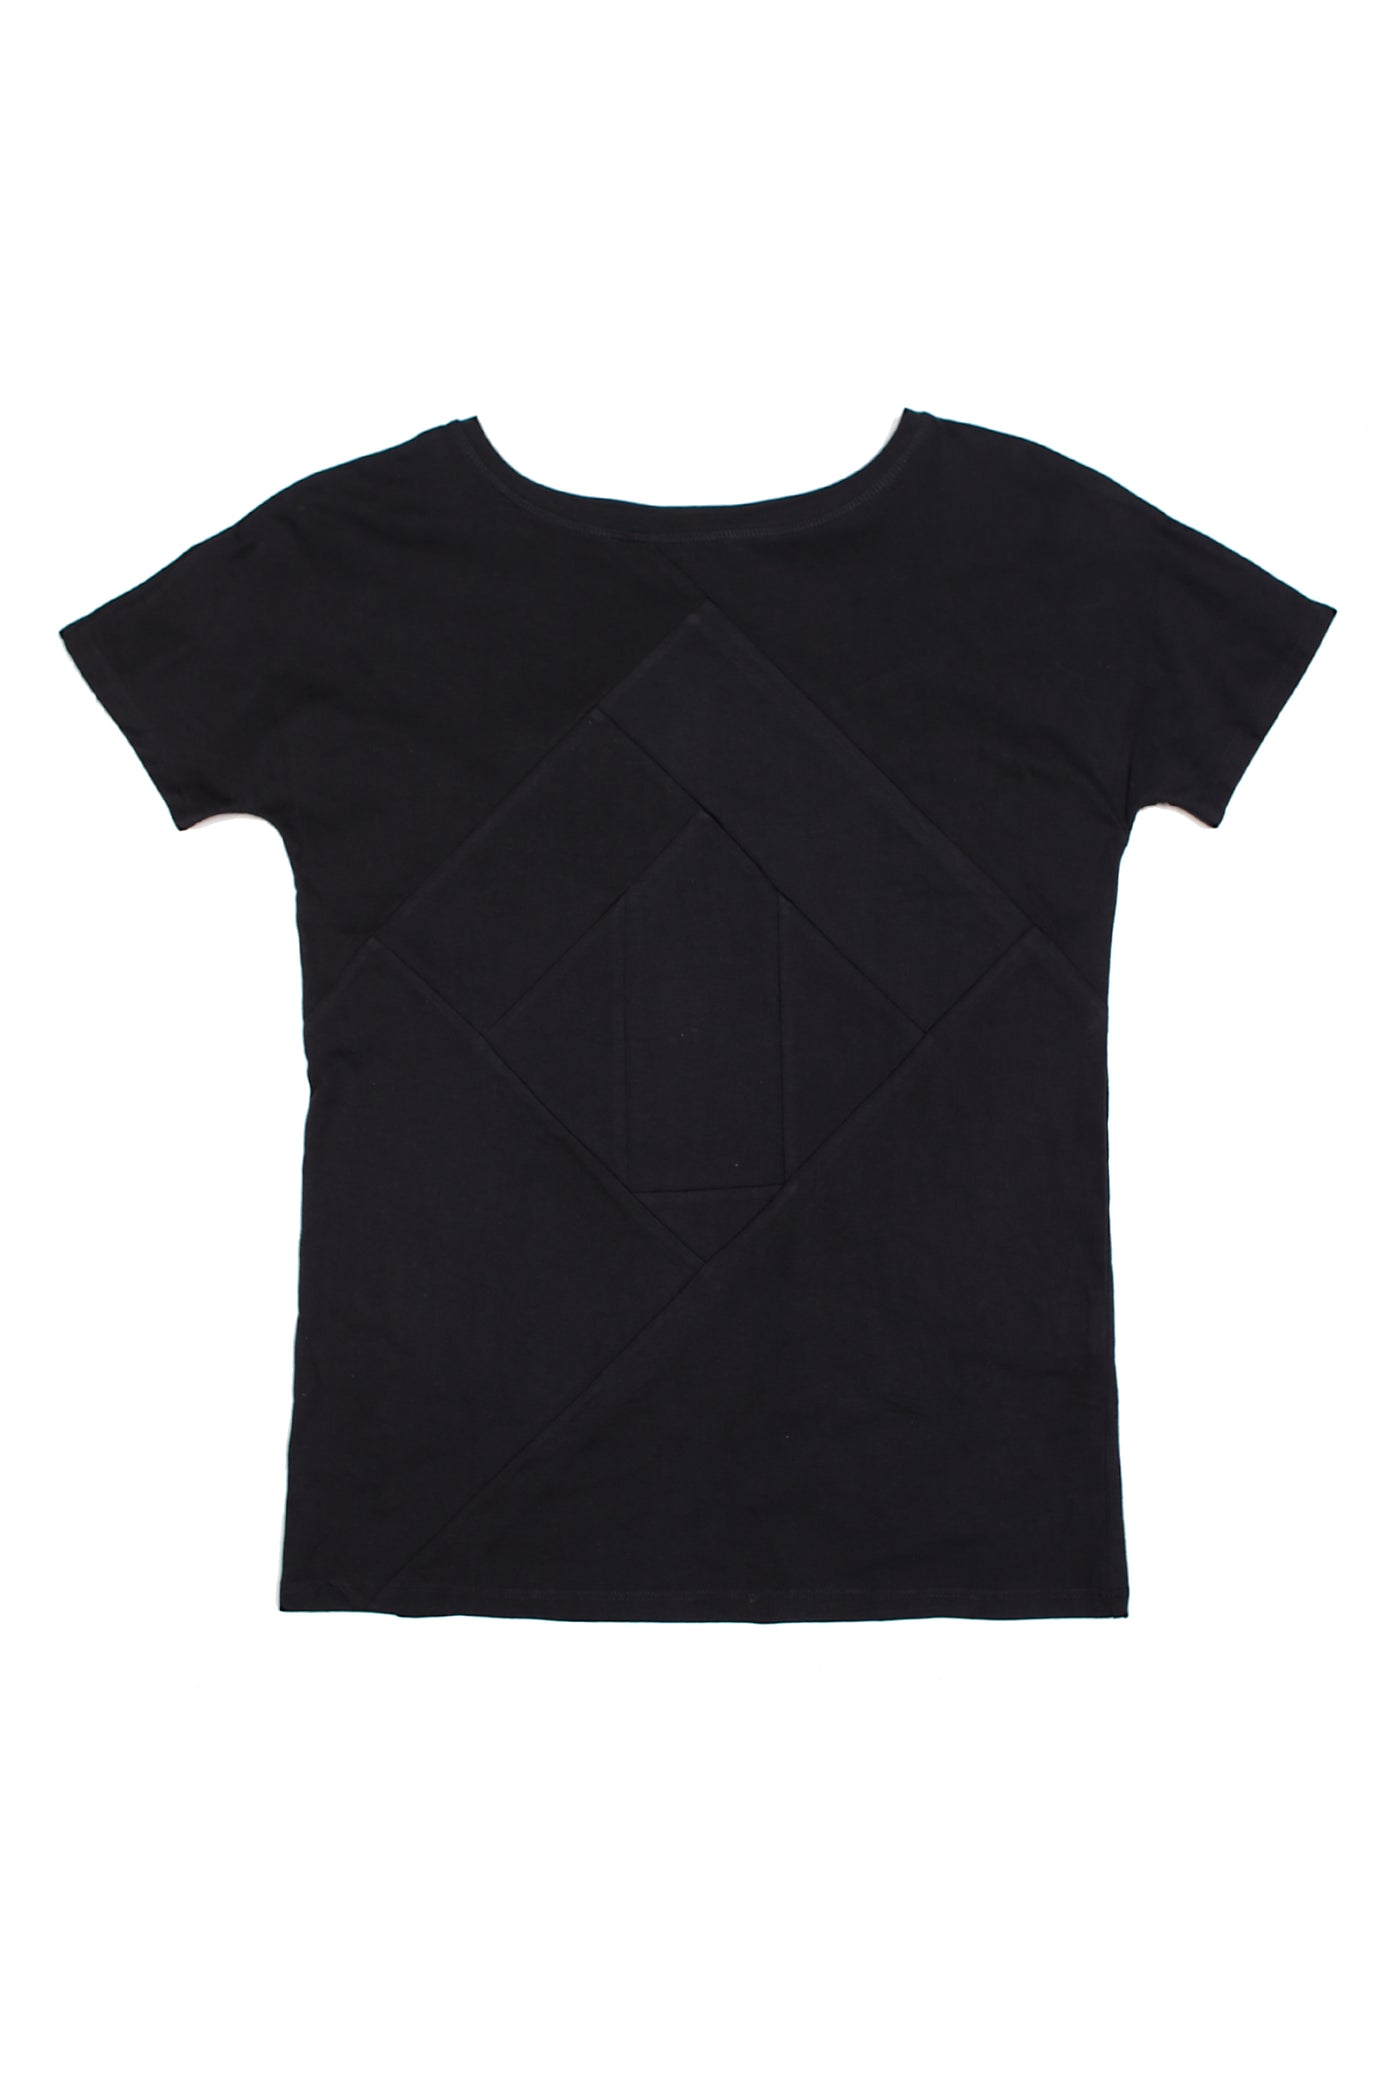 Up-shirt for women | Black, black - Reet Aus